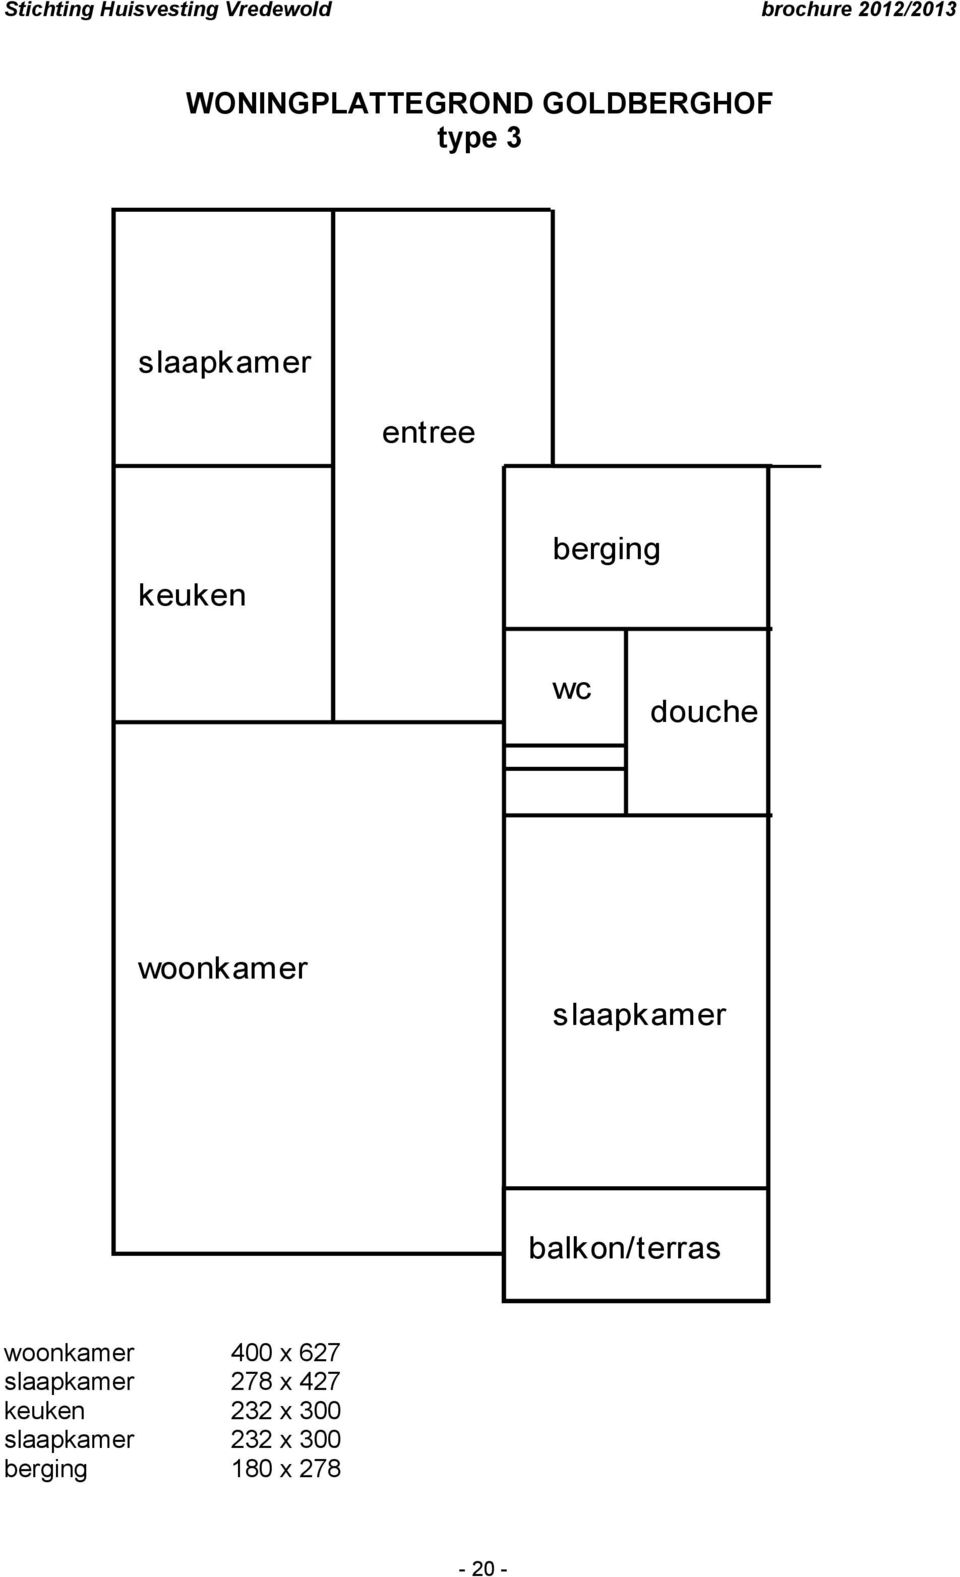 balkon/terras woonkamer 400 x 627 slaapkamer 278 x